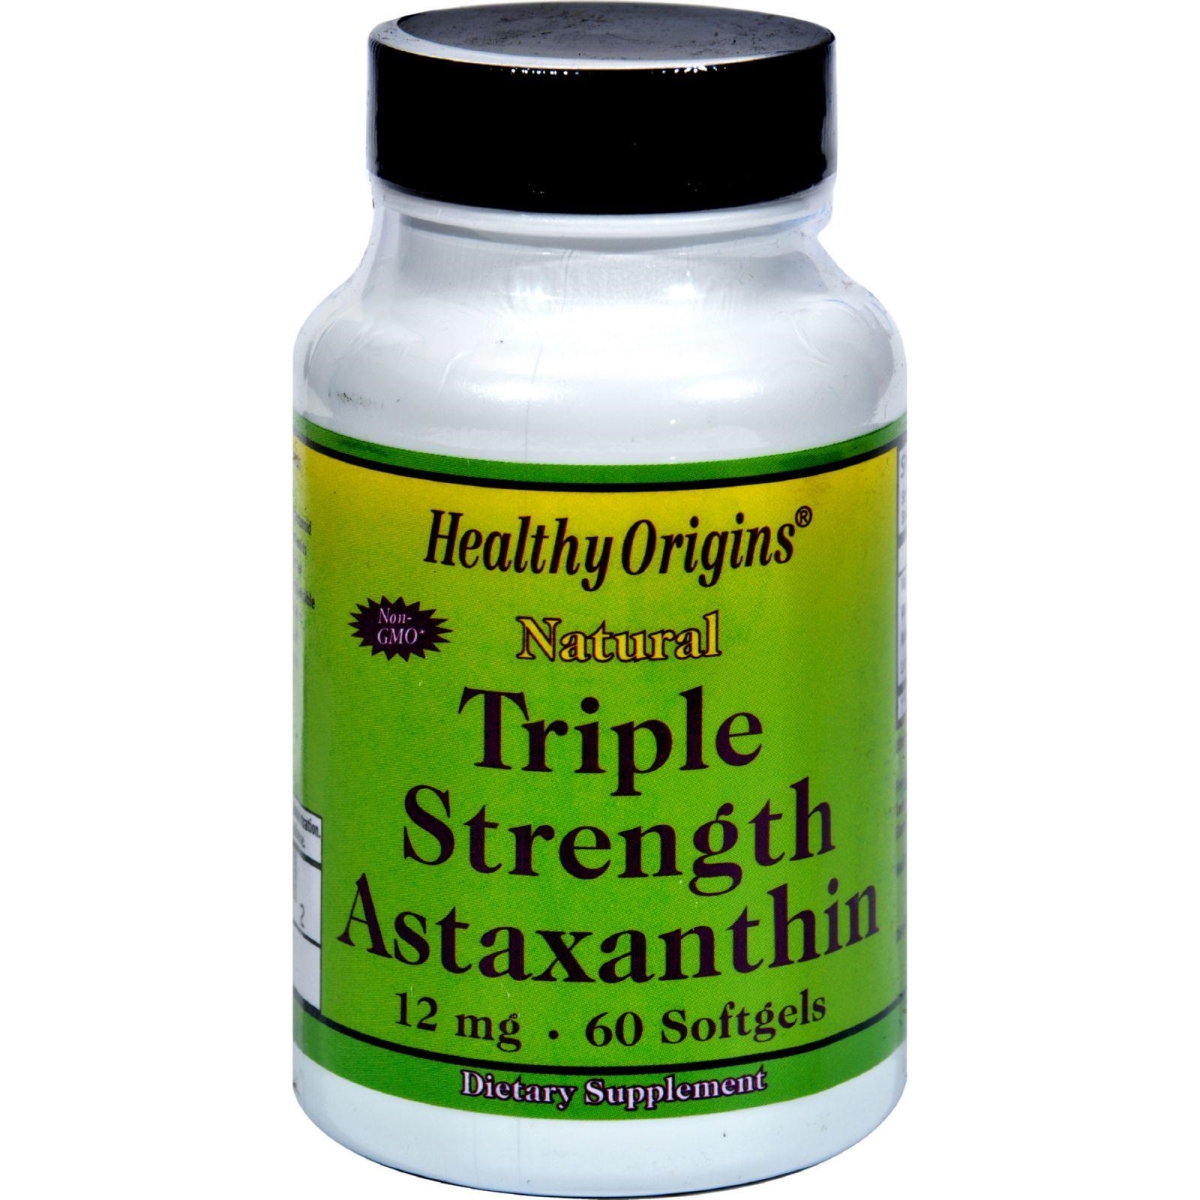 Hg1099555 12 Mg Astaxanthin Triple Strength - 60 Softgels